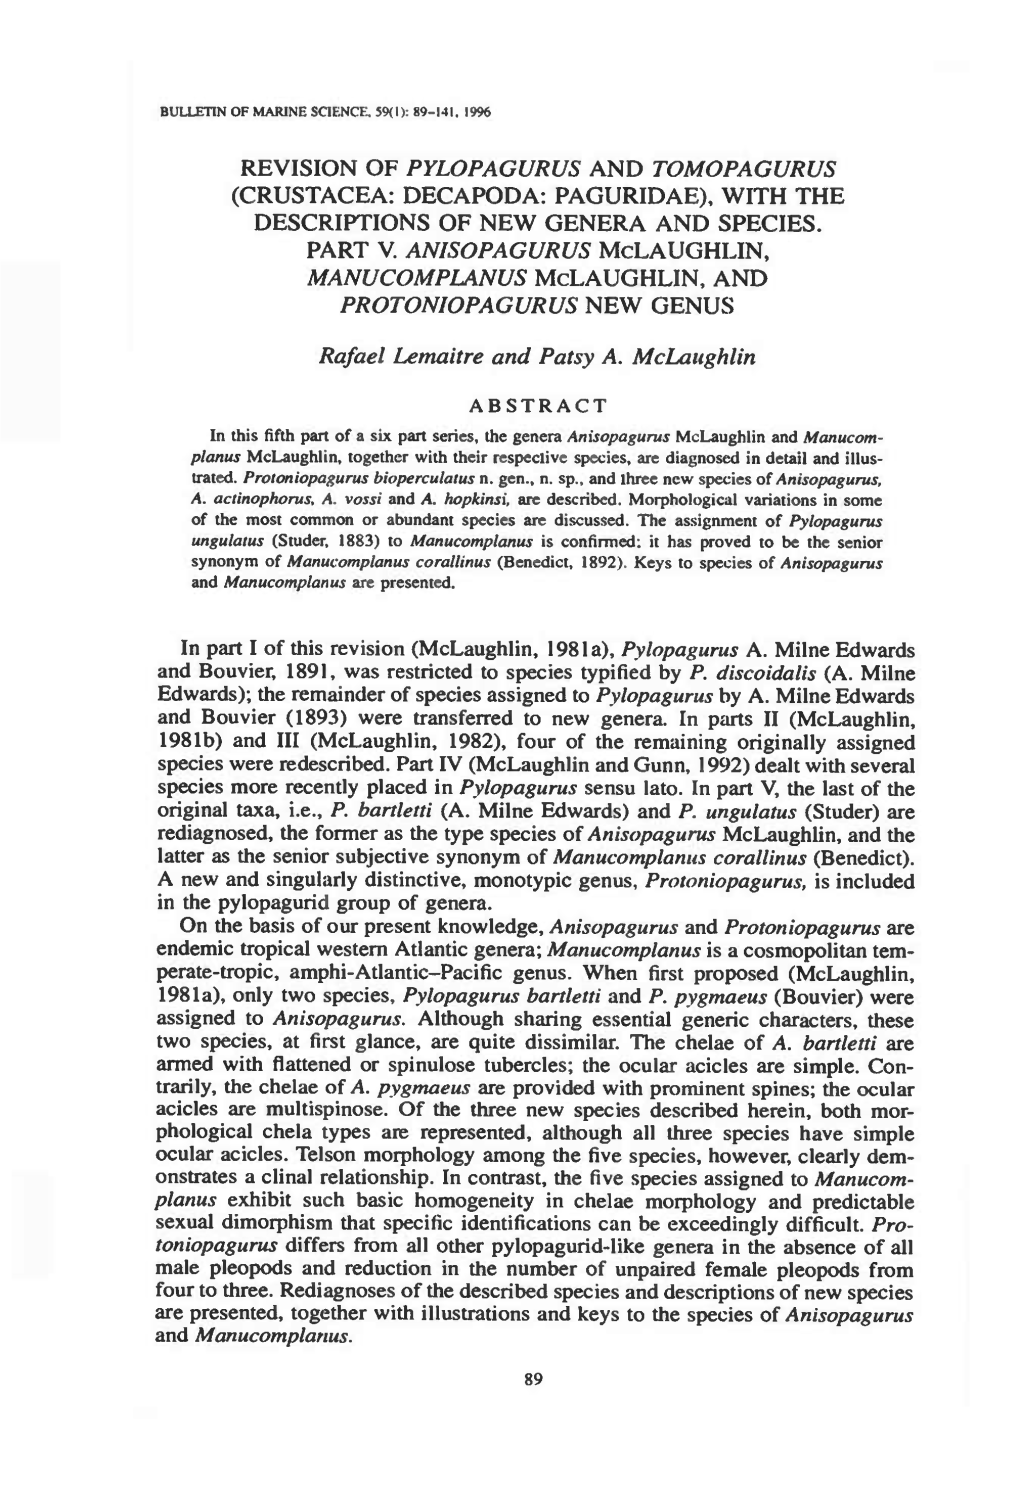 Revision of Pylopagurus and Tomopagurus (Crustacea: Decapoda: Paguridae), with the Descriptions of New Genera and Species. Part V